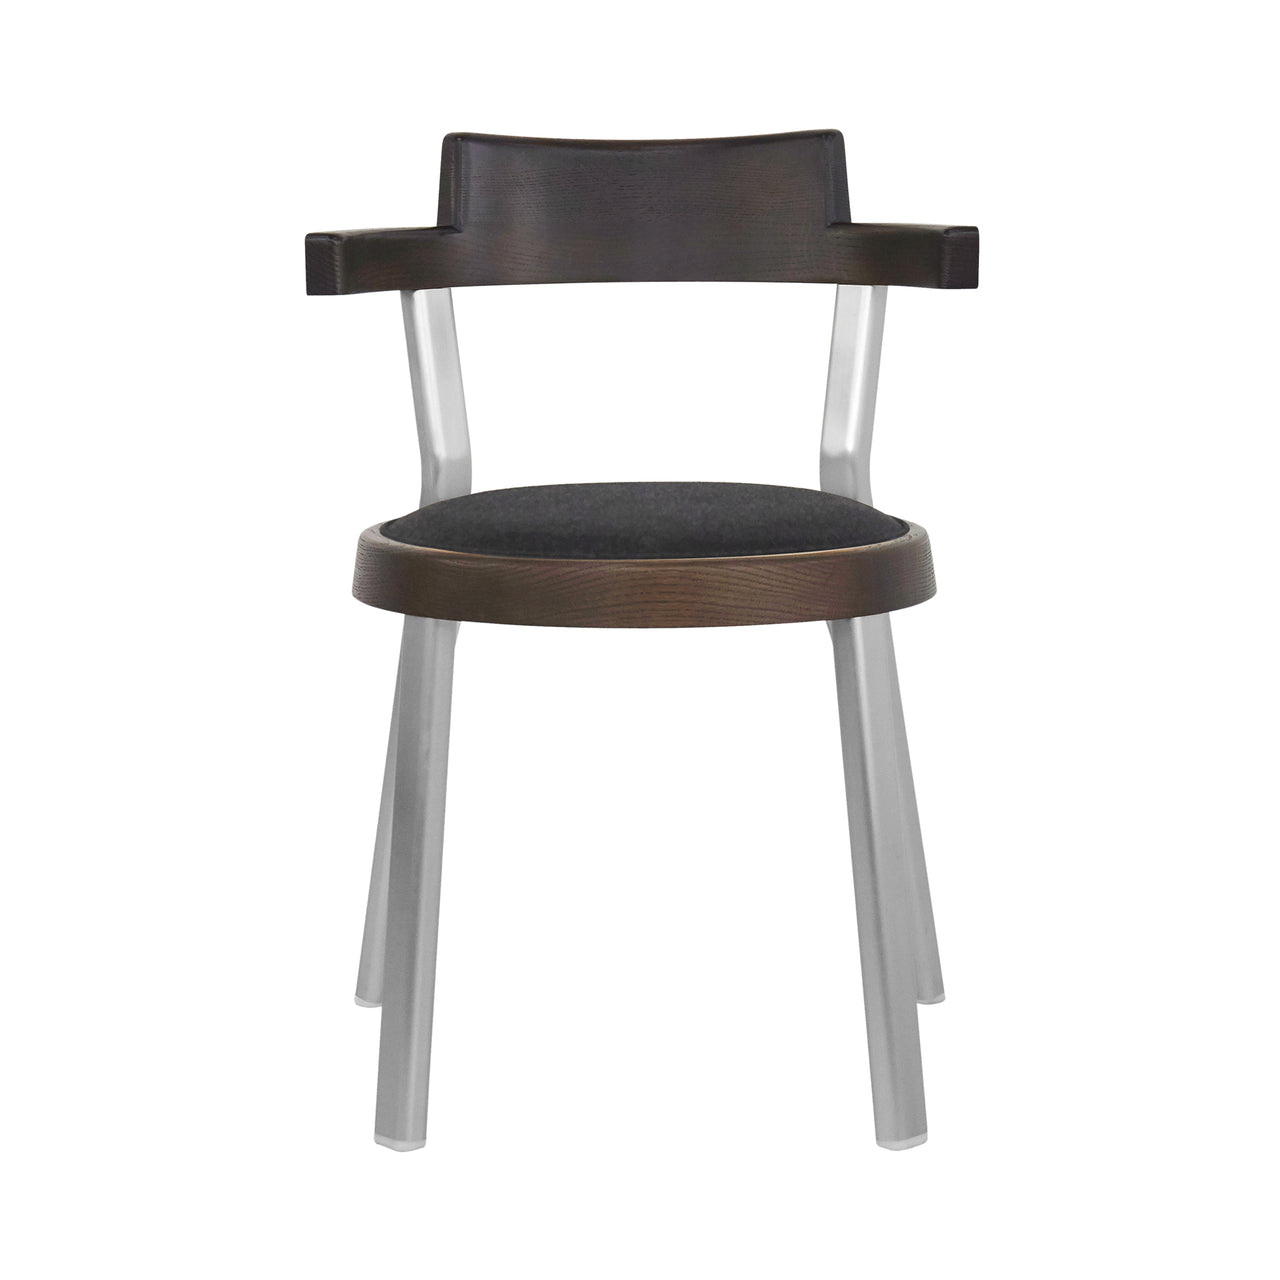 Pagoda Chair: Upholstery + Aluminum Leg + Silver + Dark Brown Oak